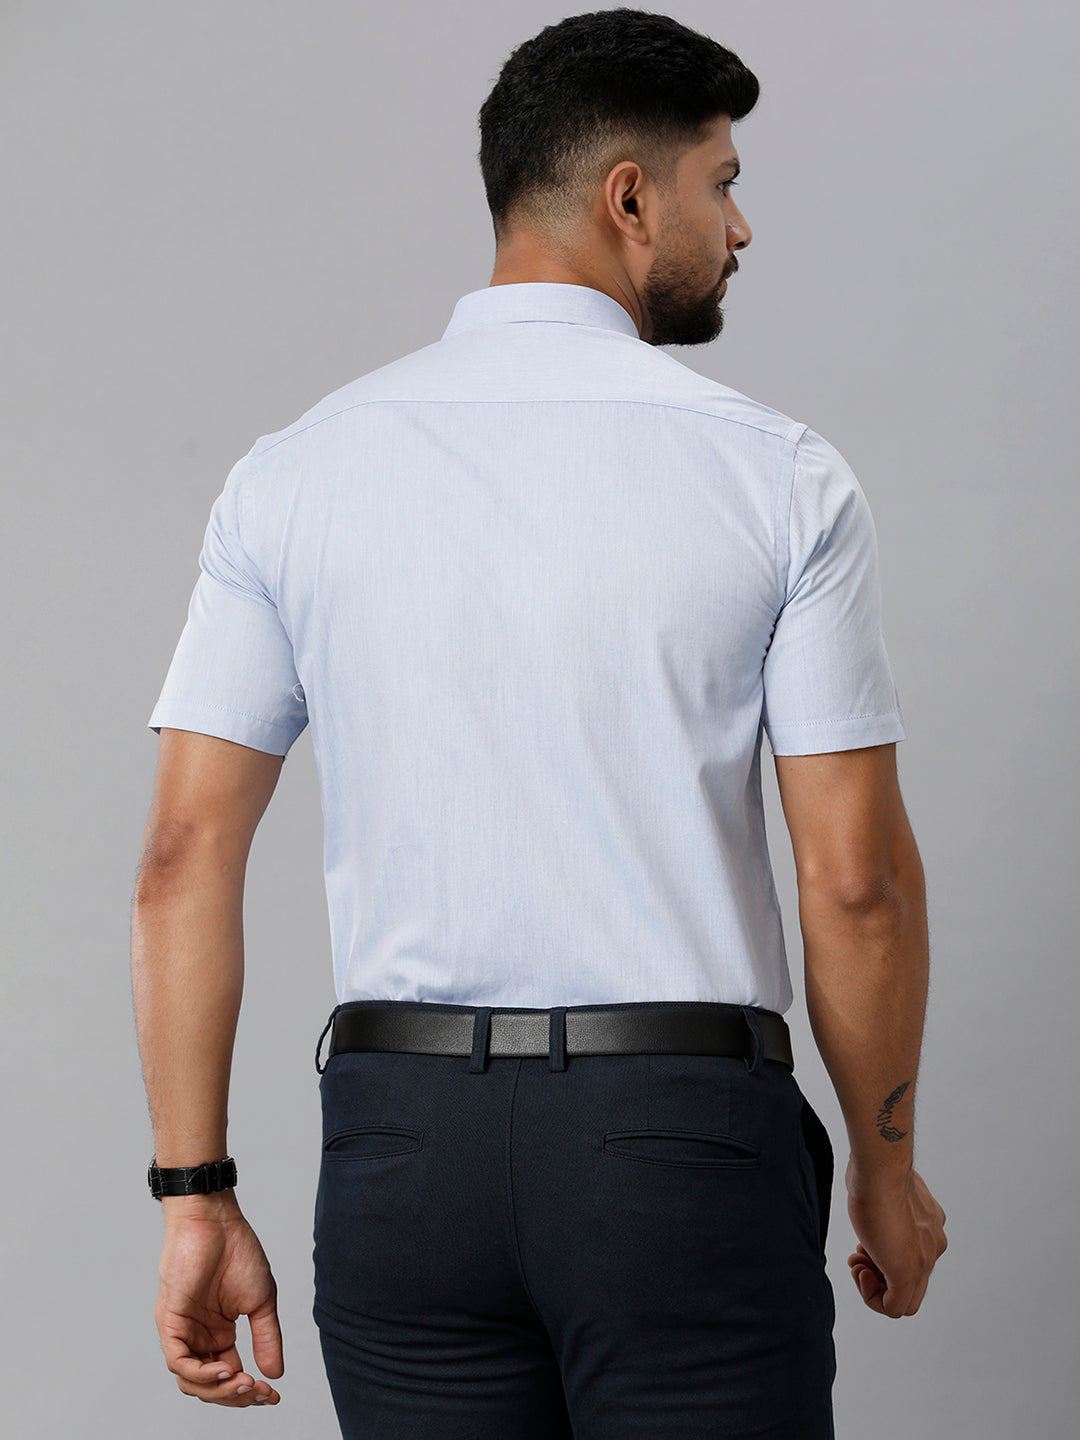 Mens Premium Cotton Formal Shirt Half Sleeves Blue MH G119-Back view